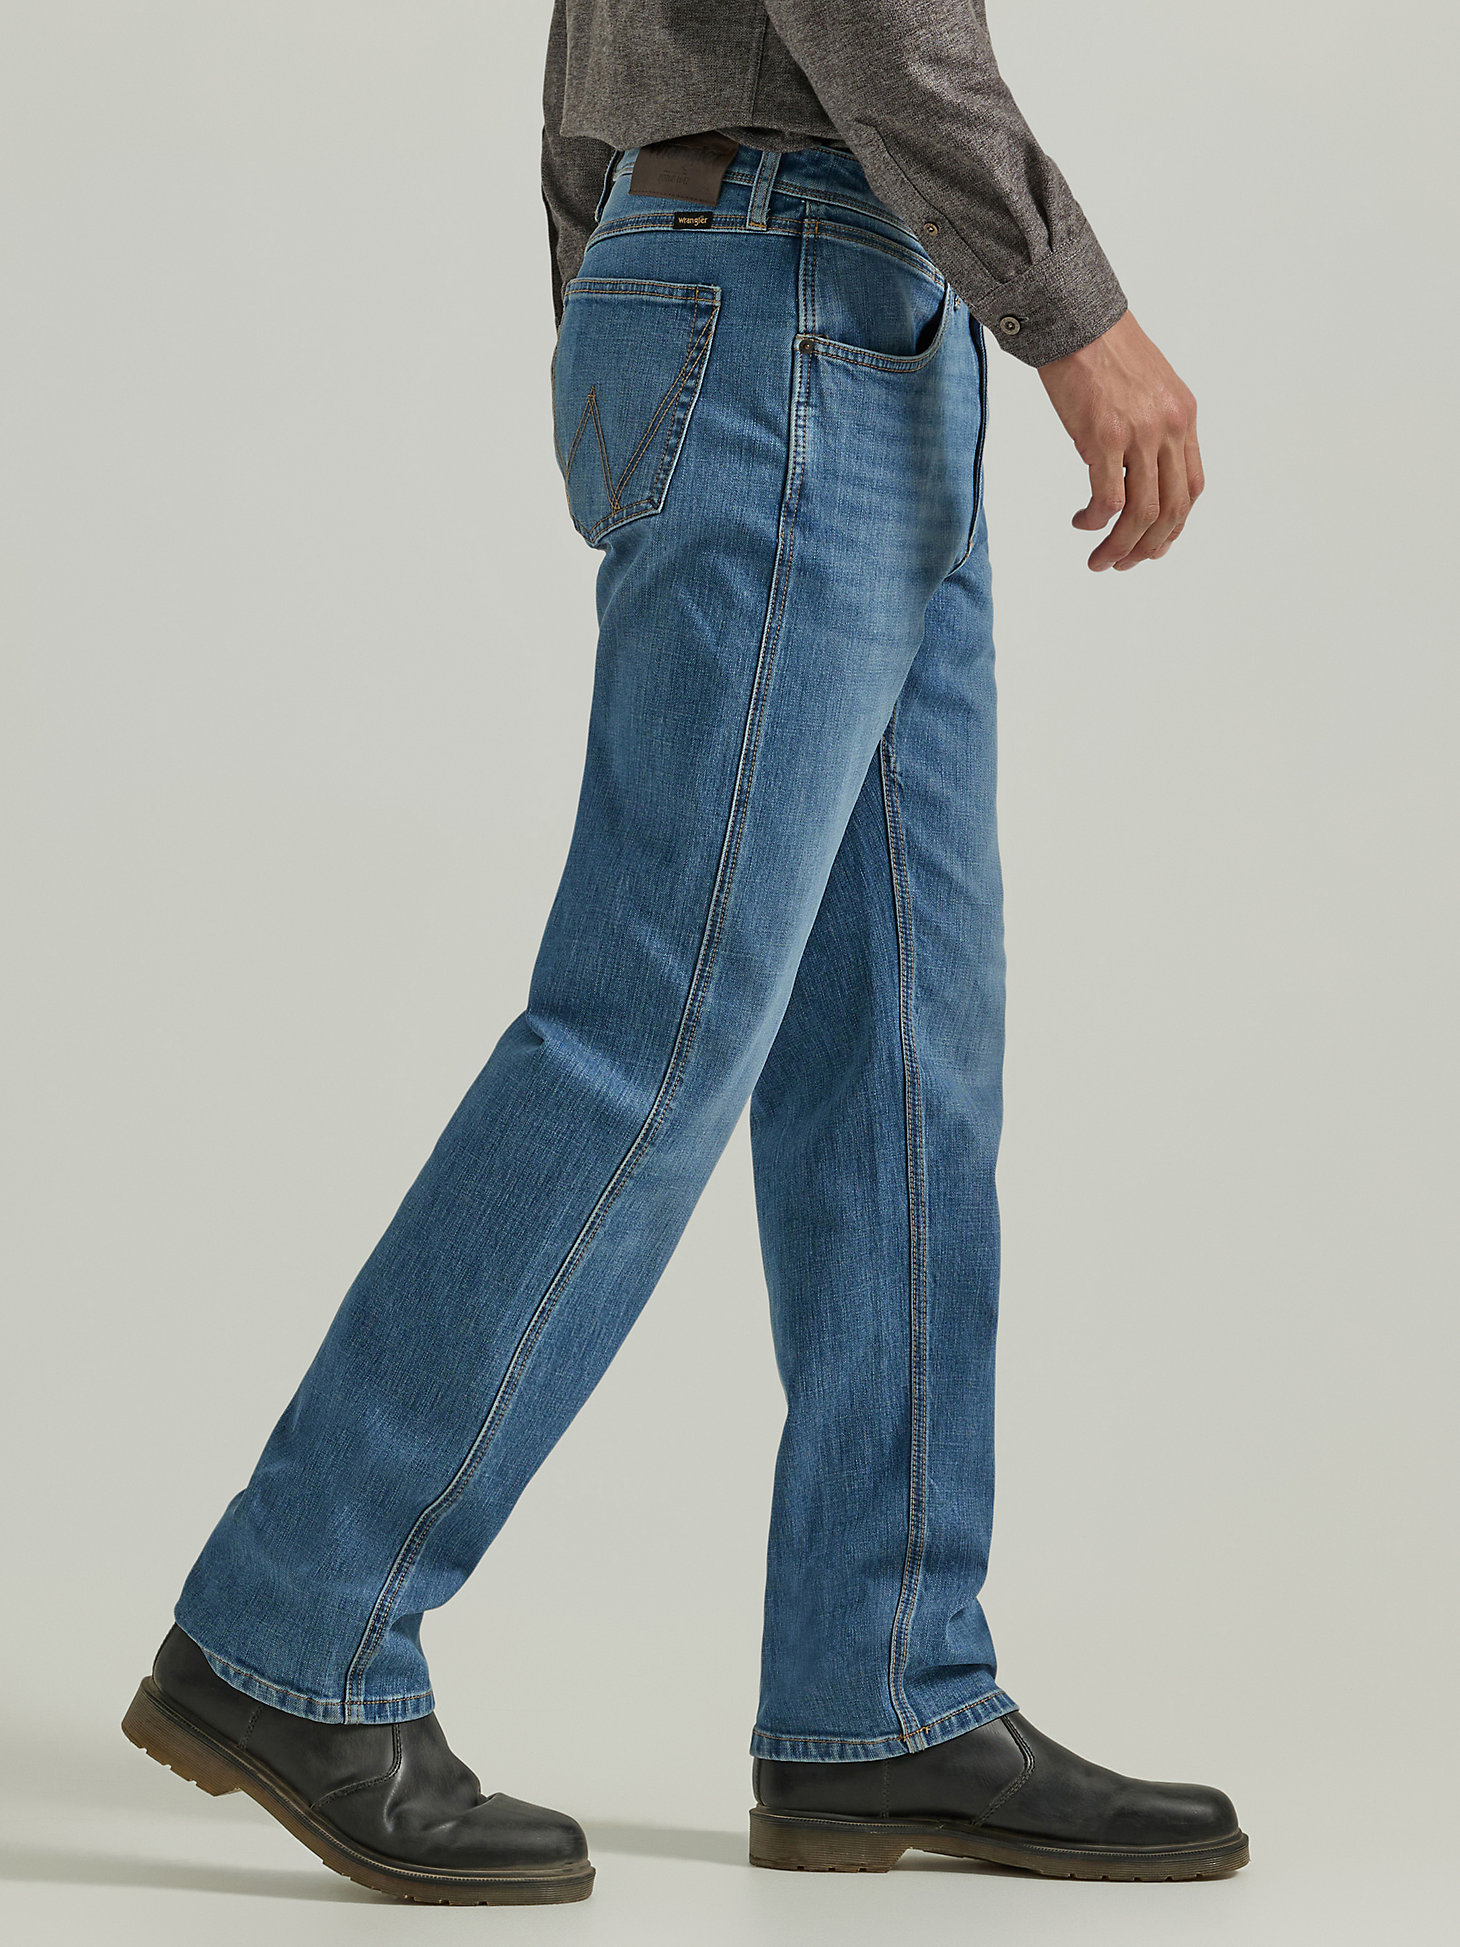 Men's Comfort That Won't Quit Regular Fit Jean in Medium Blue alternative view 5